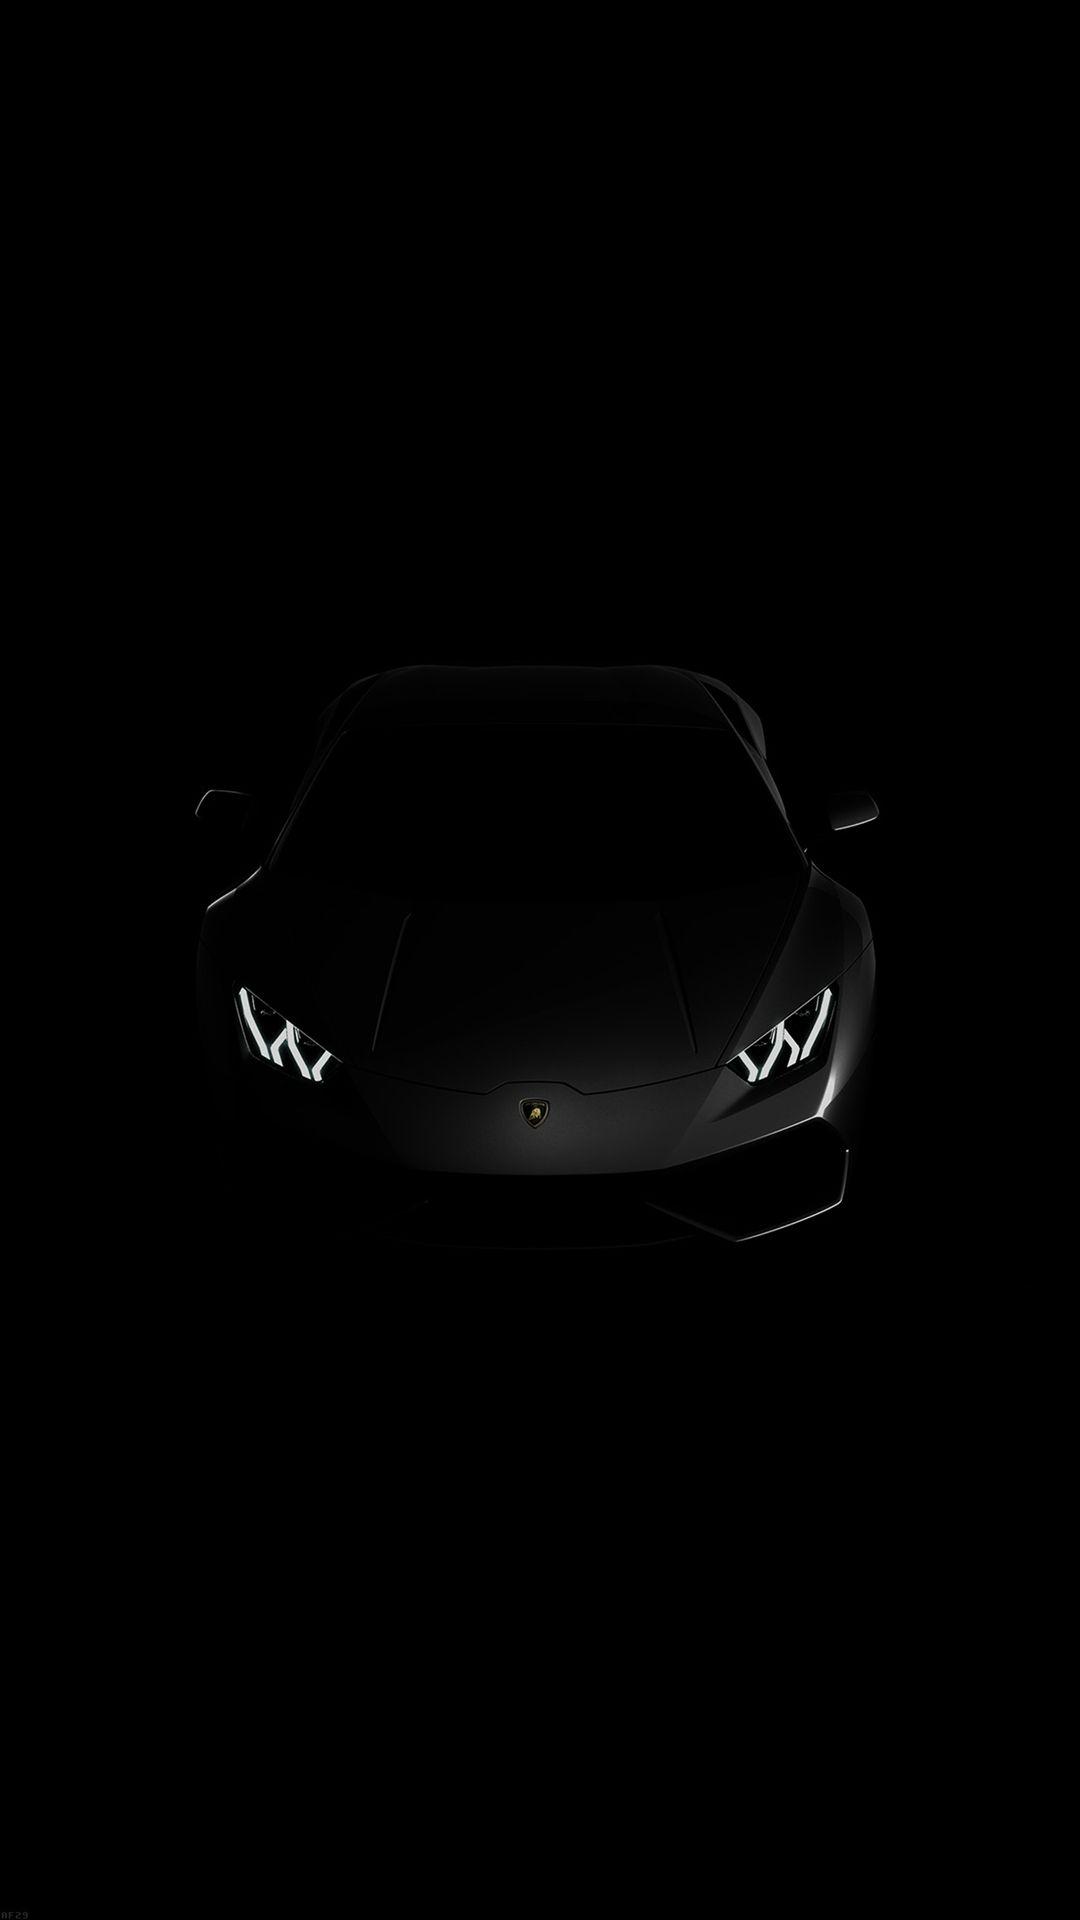 Lamborghini Wallpapers Top Free Lamborghini Backgrounds Wallpaperaccess